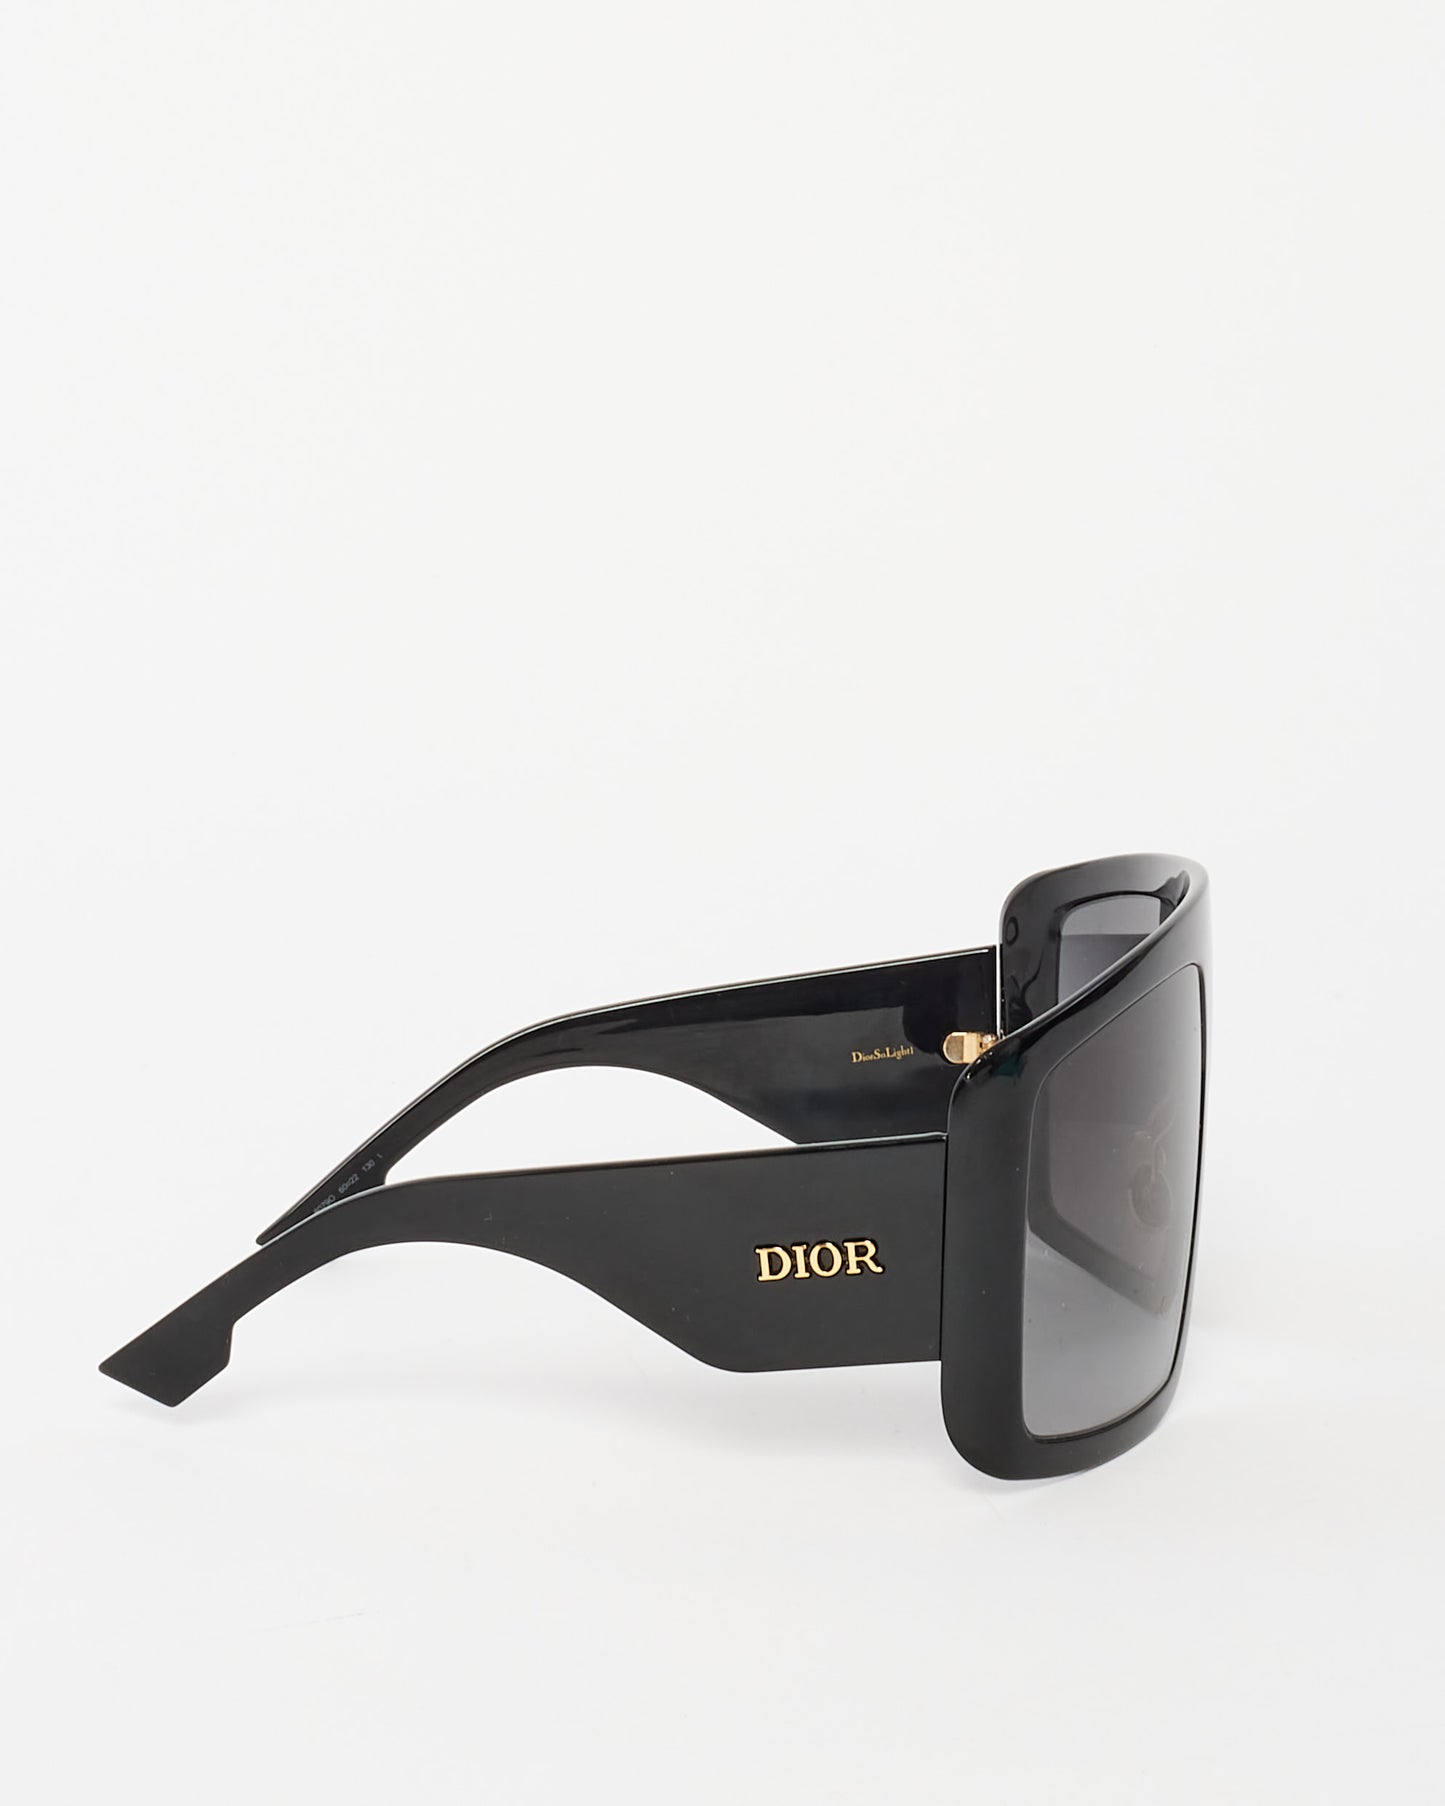 Dior Black Acetate So Light 1 Shield Sunglasses